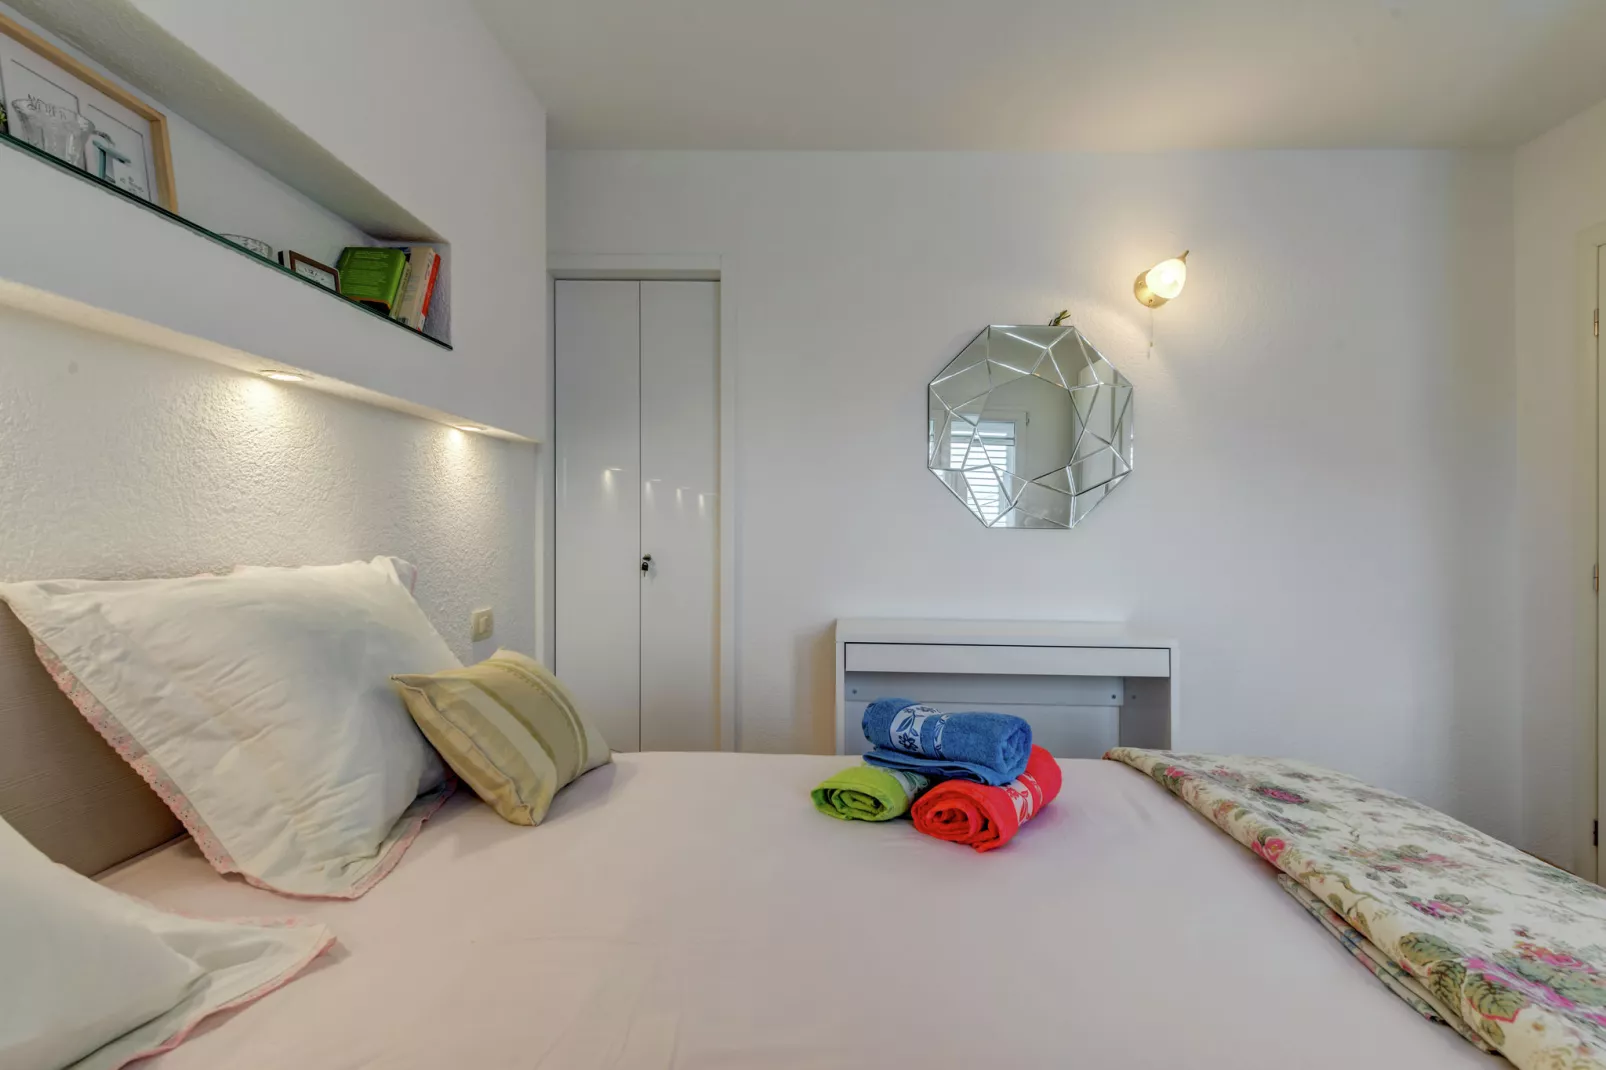 One bedroom apartment Marin-Slaapkamer